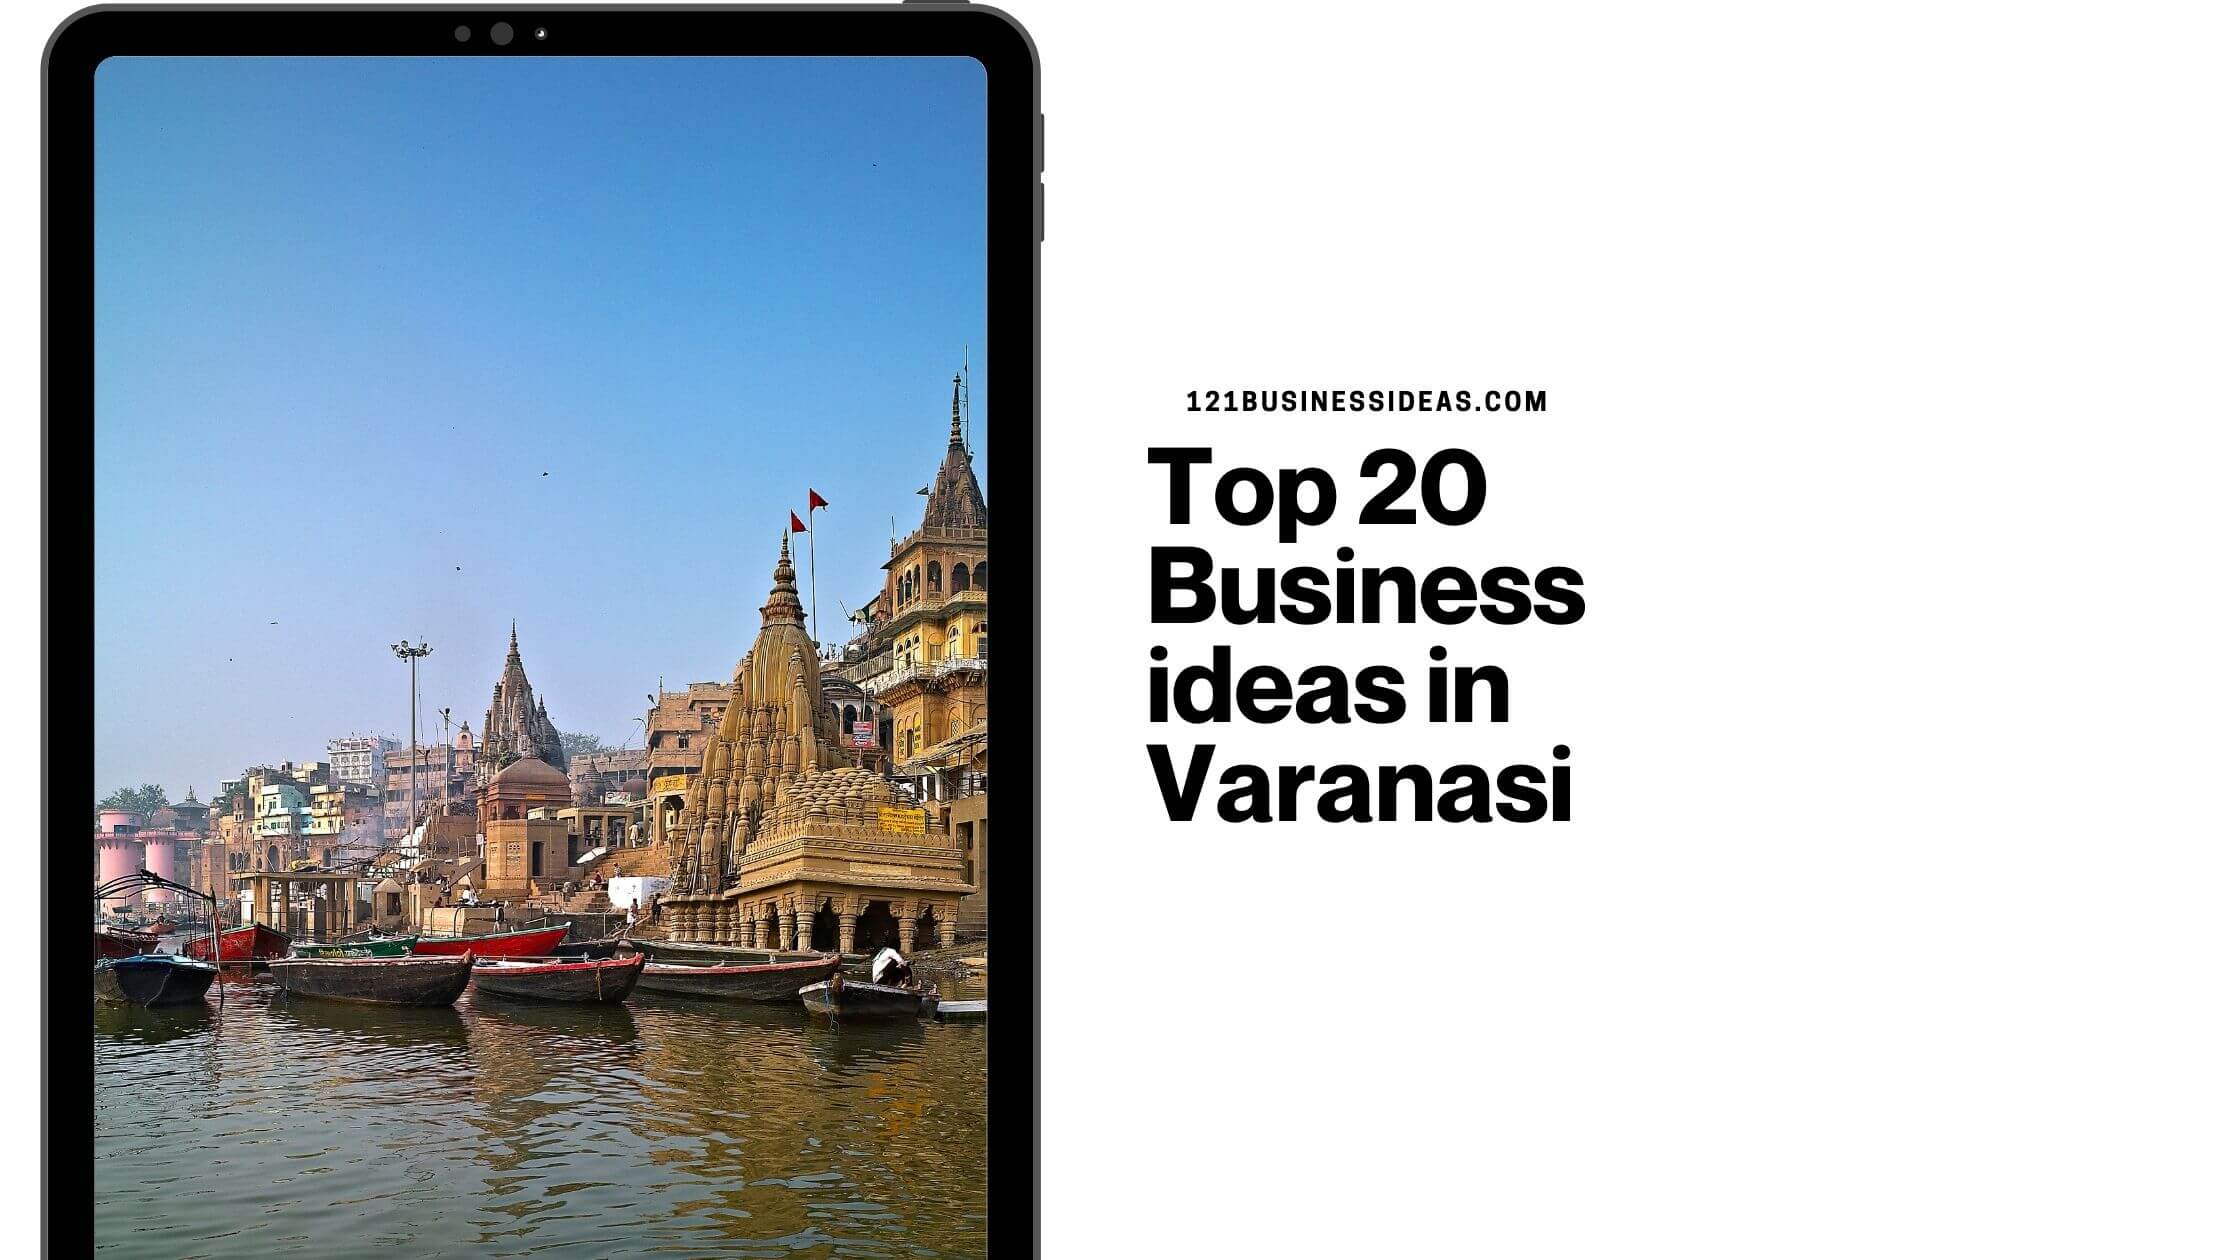 Top 20 Business ideas in Varanasi (1)